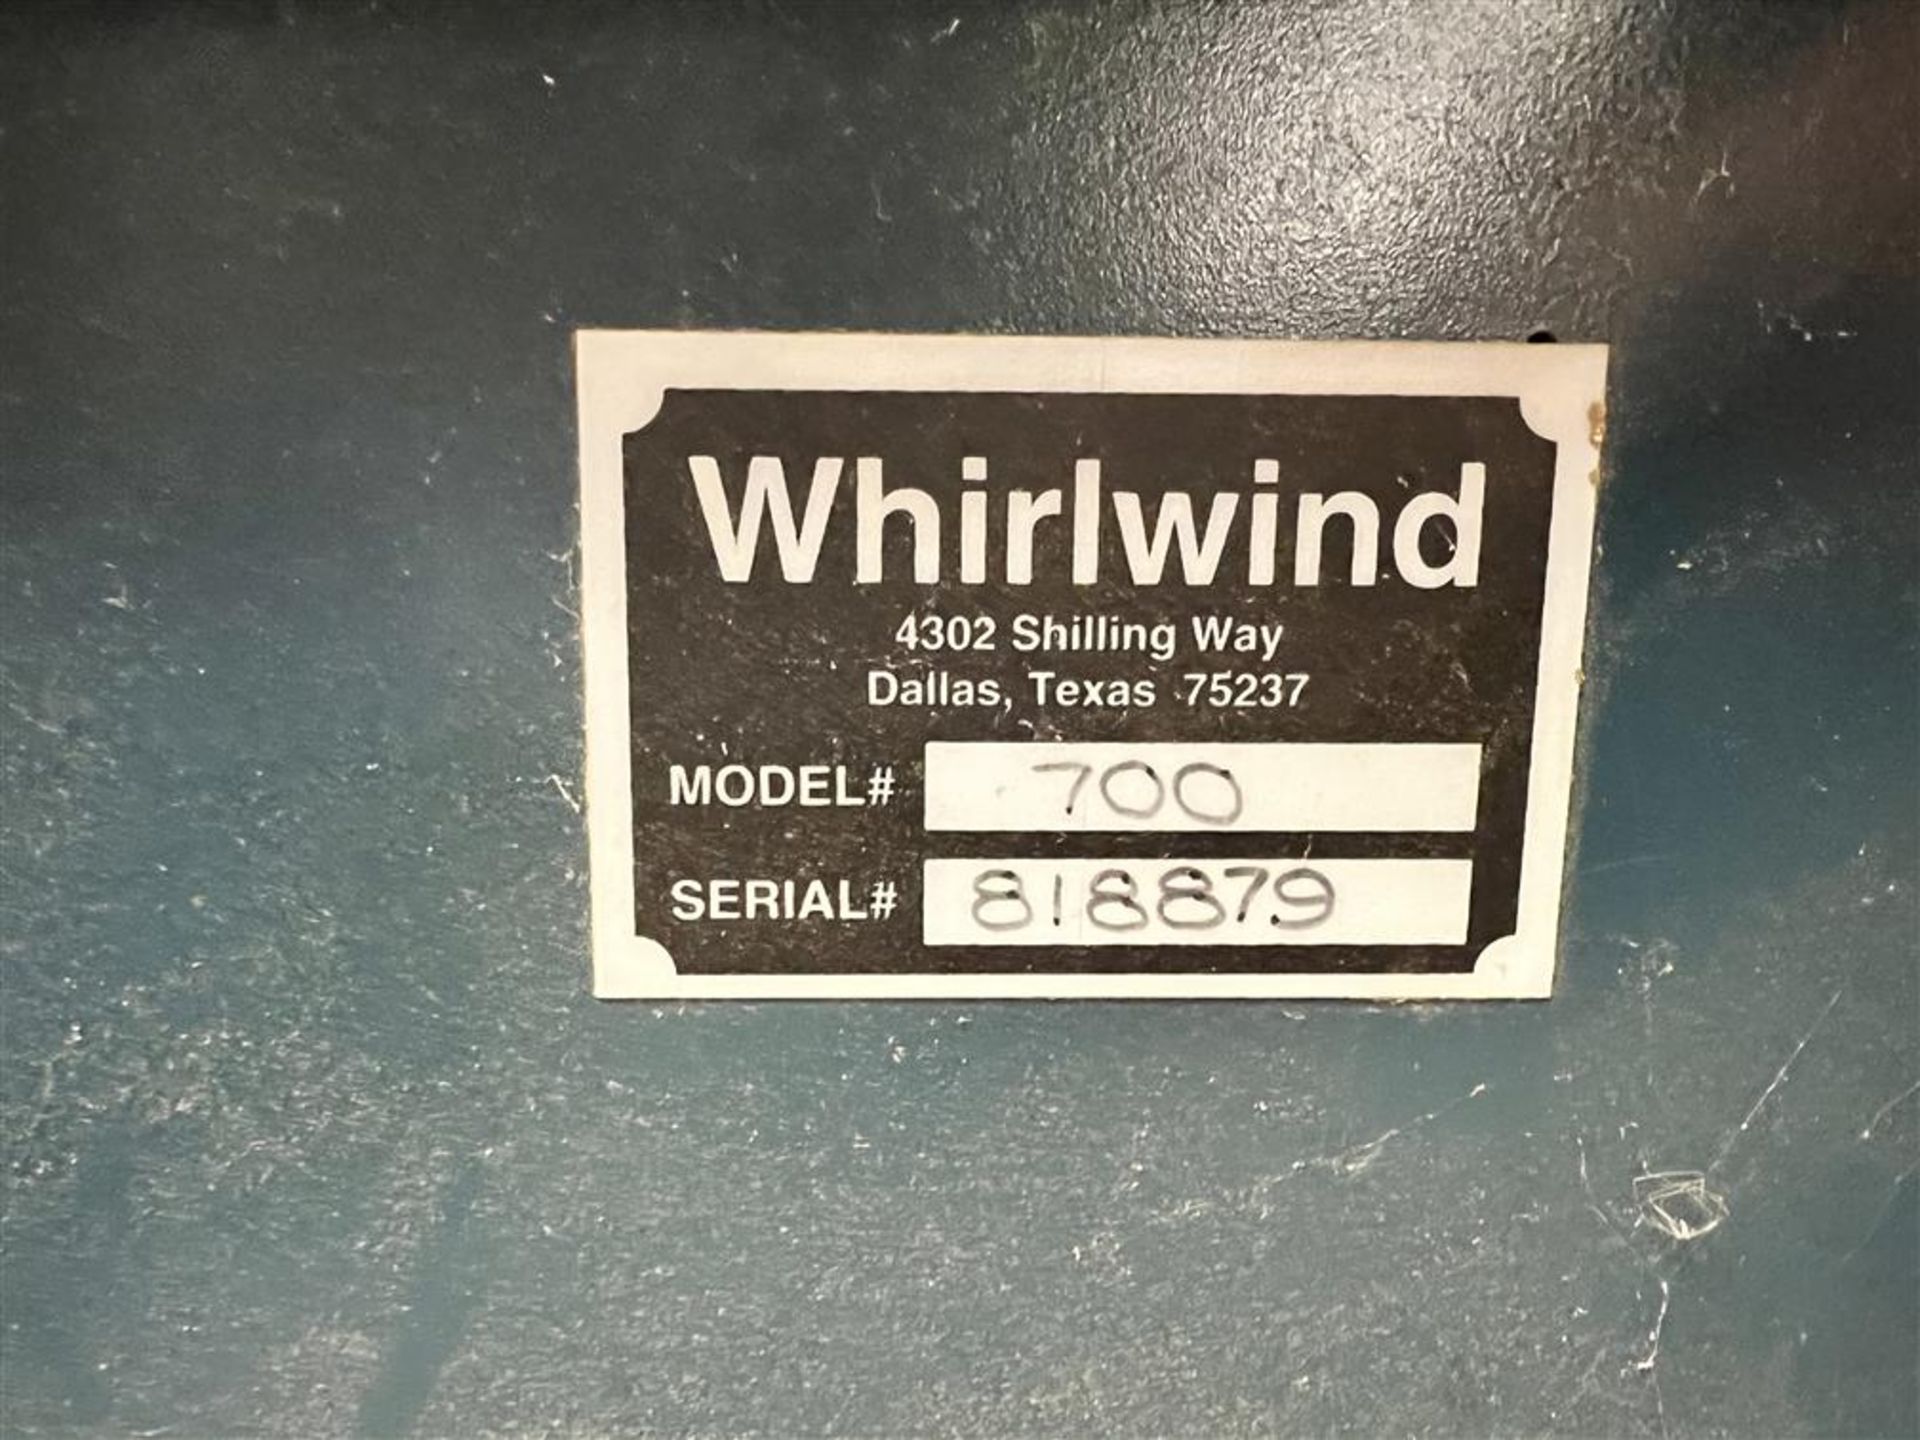 WHIRLWIND MODEL 700 SPINDLE SANDER, 1HP, S/N: 818879 - Image 2 of 4